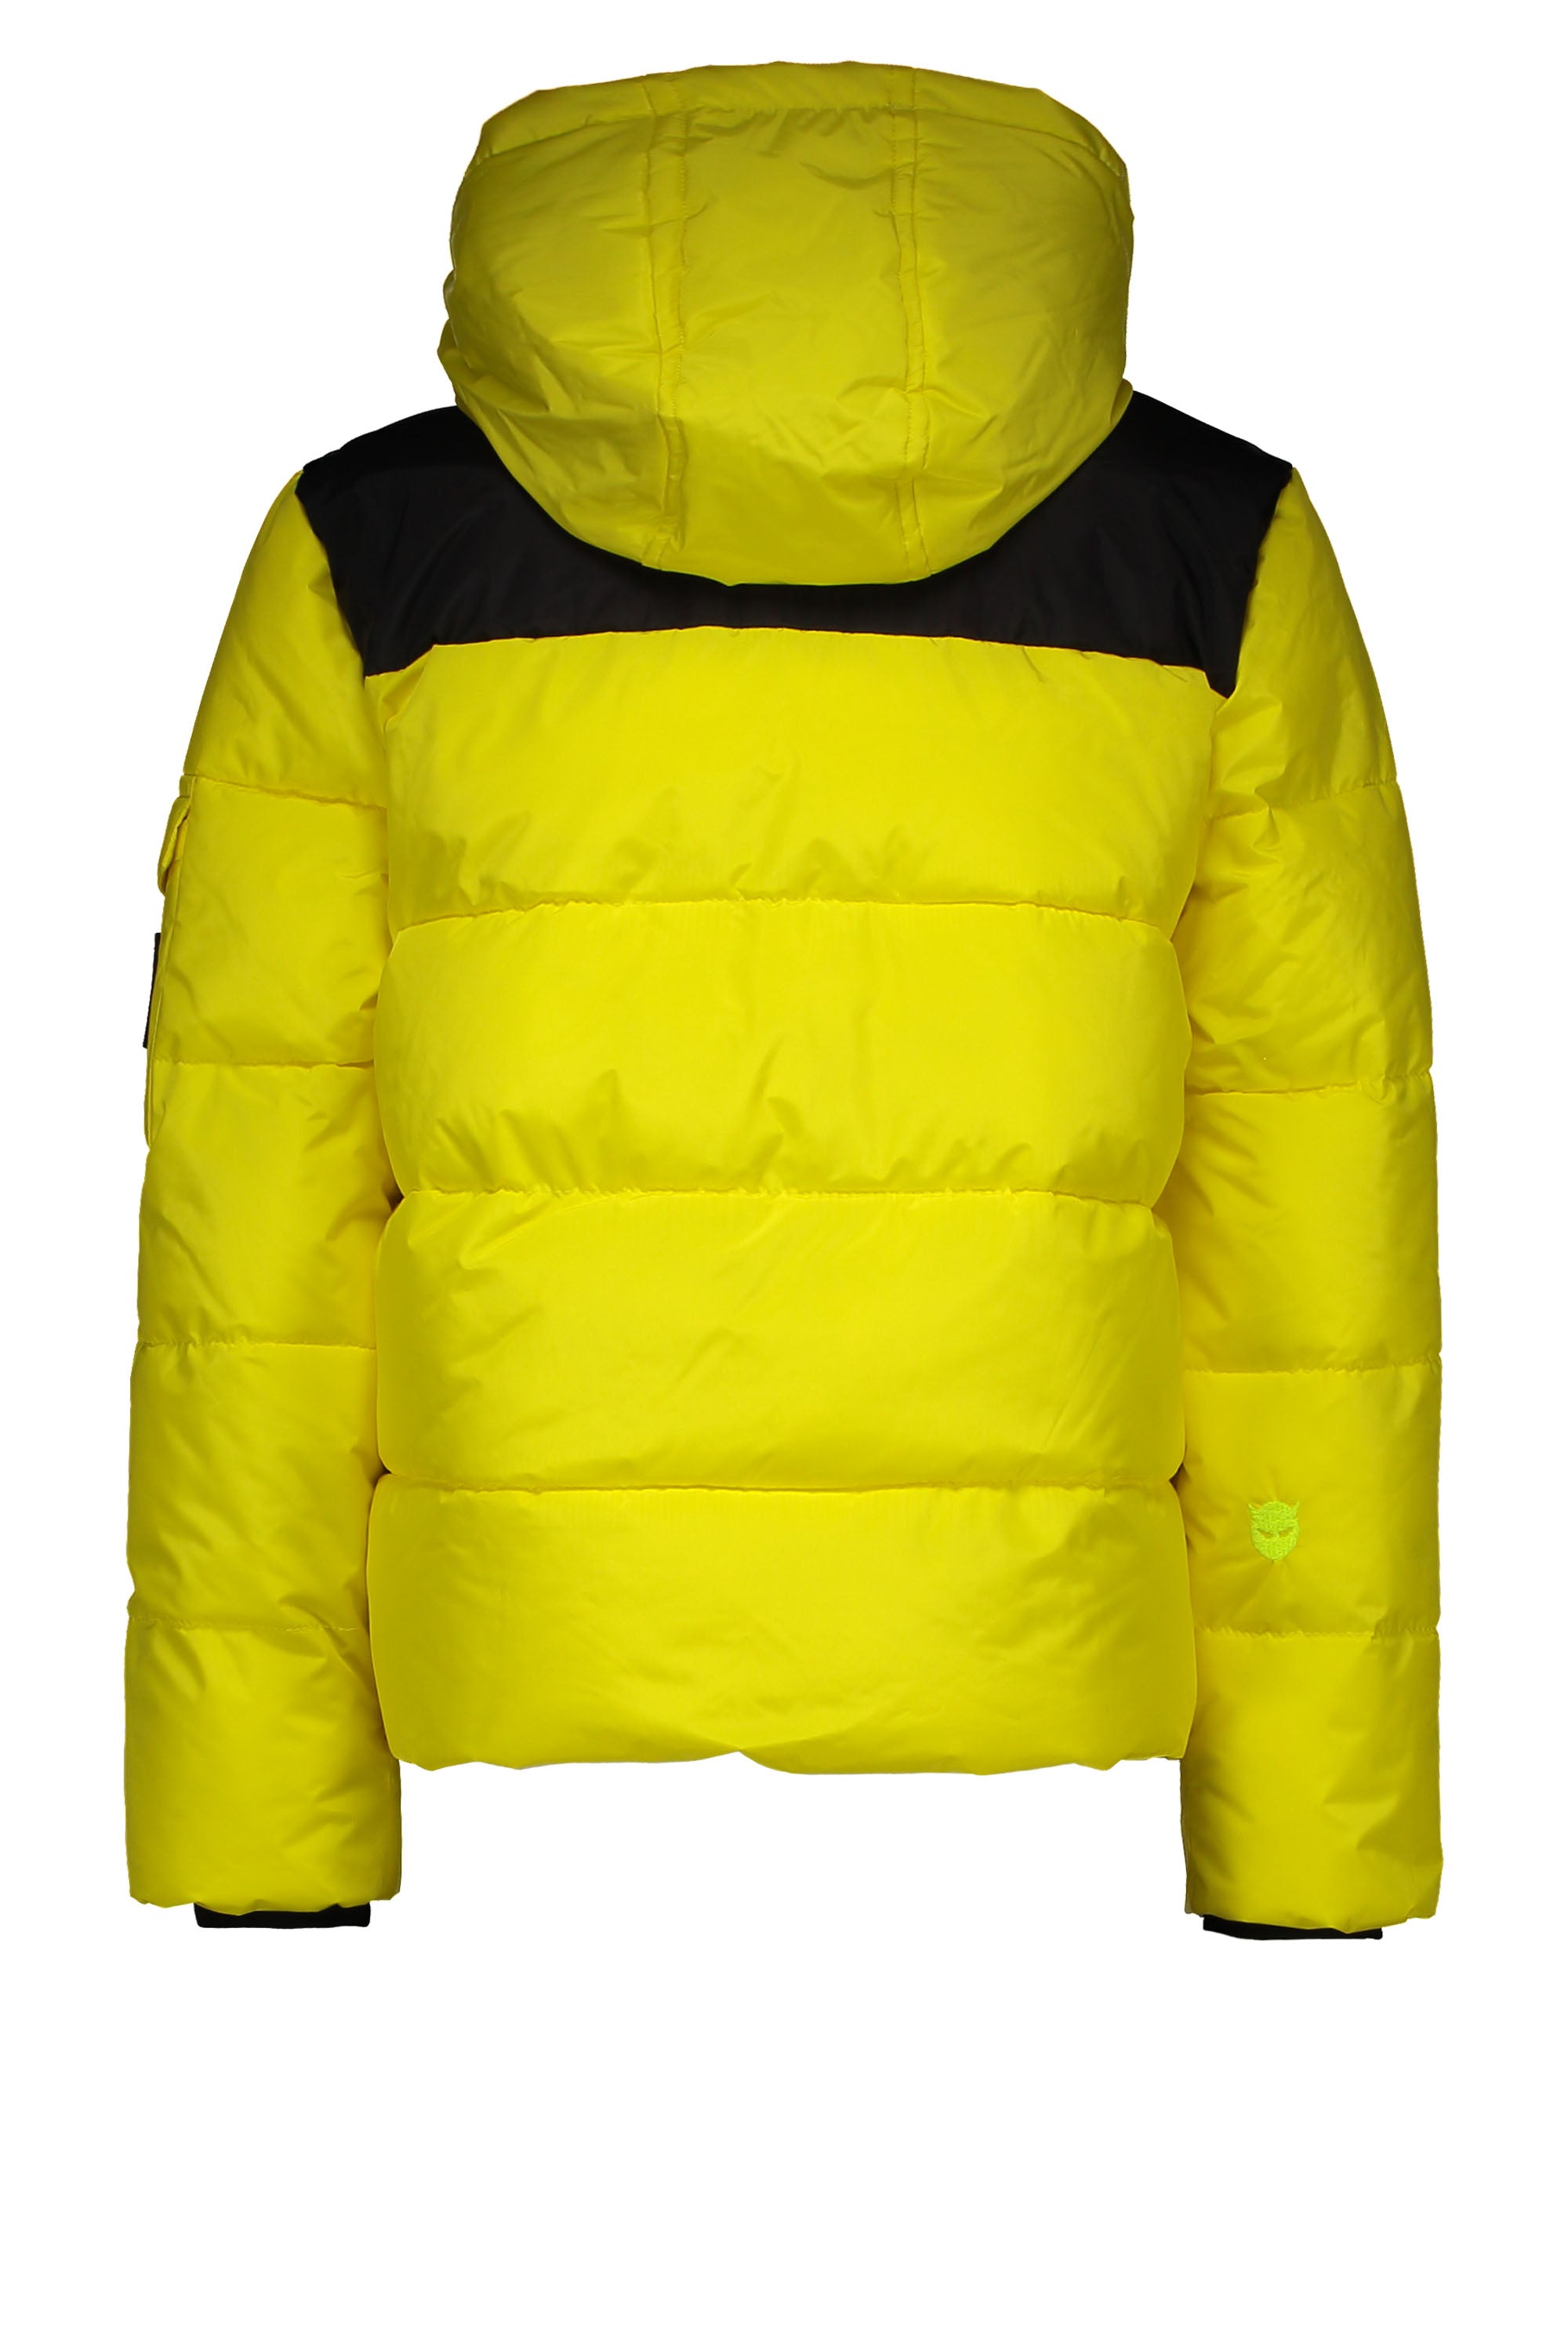 Super Rebel Winterjacket STUNG Yellow